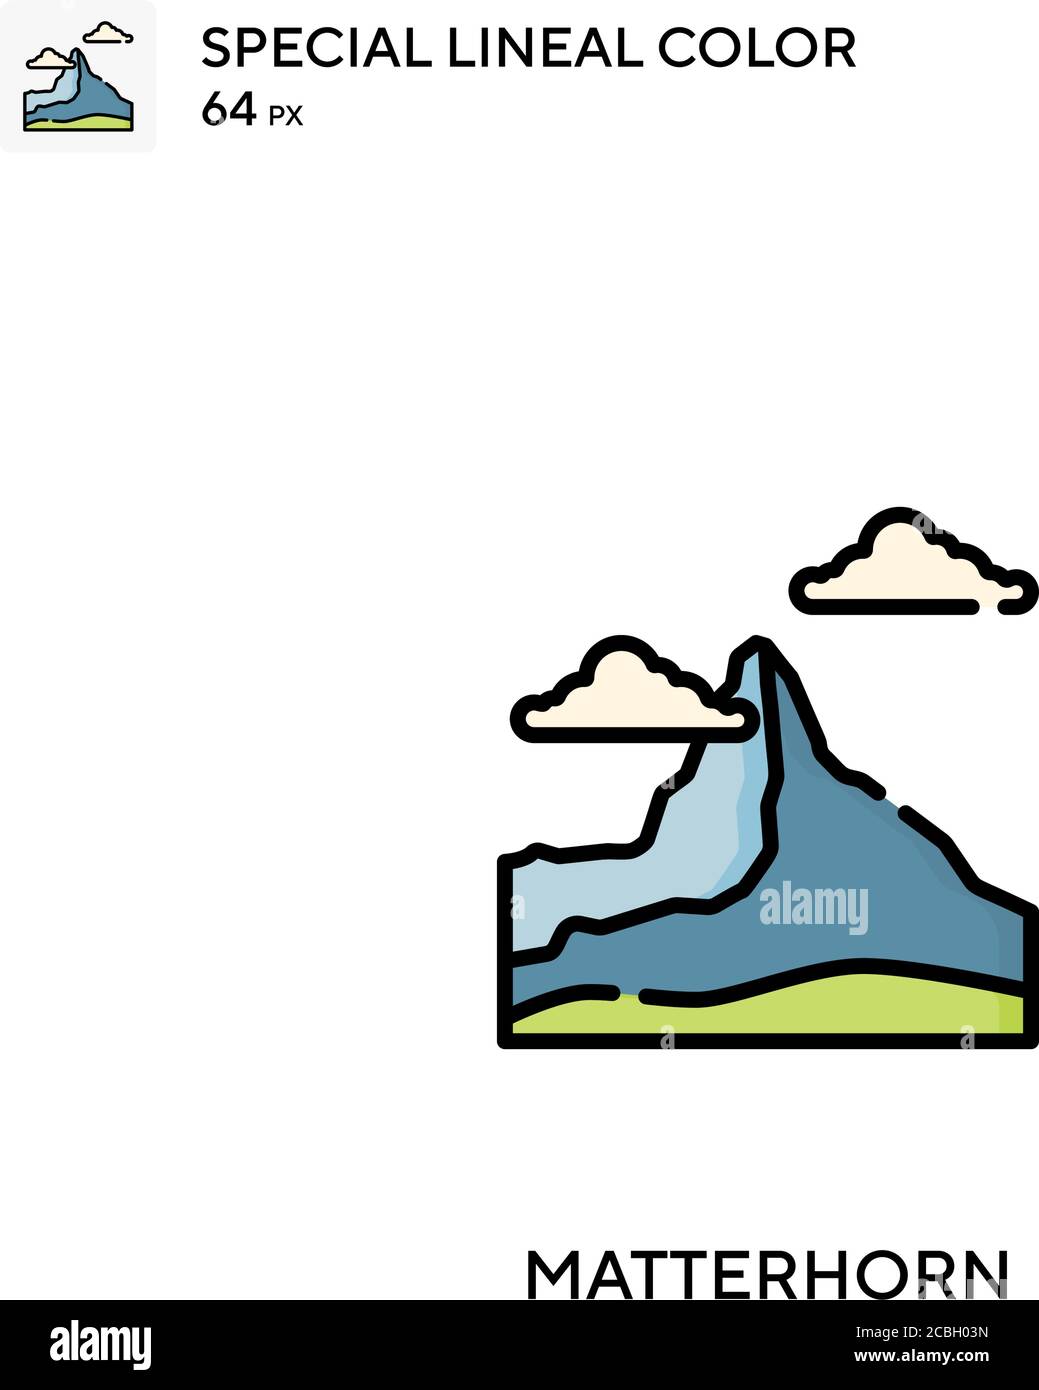 Matterhorn Special Lineal Farbe Vektor-Symbol. Matterhorn Icons für Ihr Business-Projekt Stock Vektor